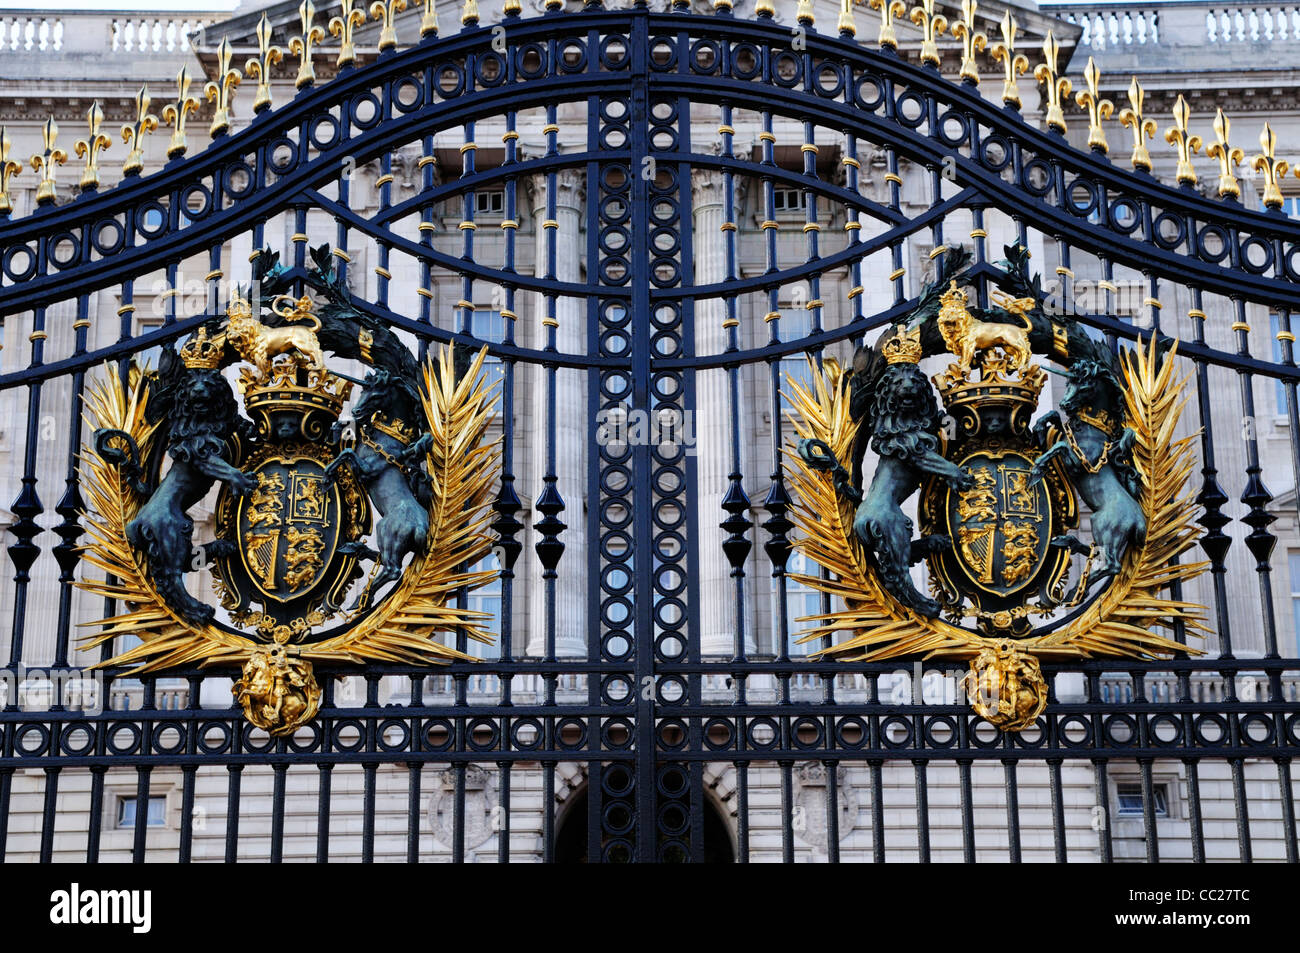 Coats of Arms on The Gates to Buckingham Palace, Westminster, London, England, UK Stock Photo